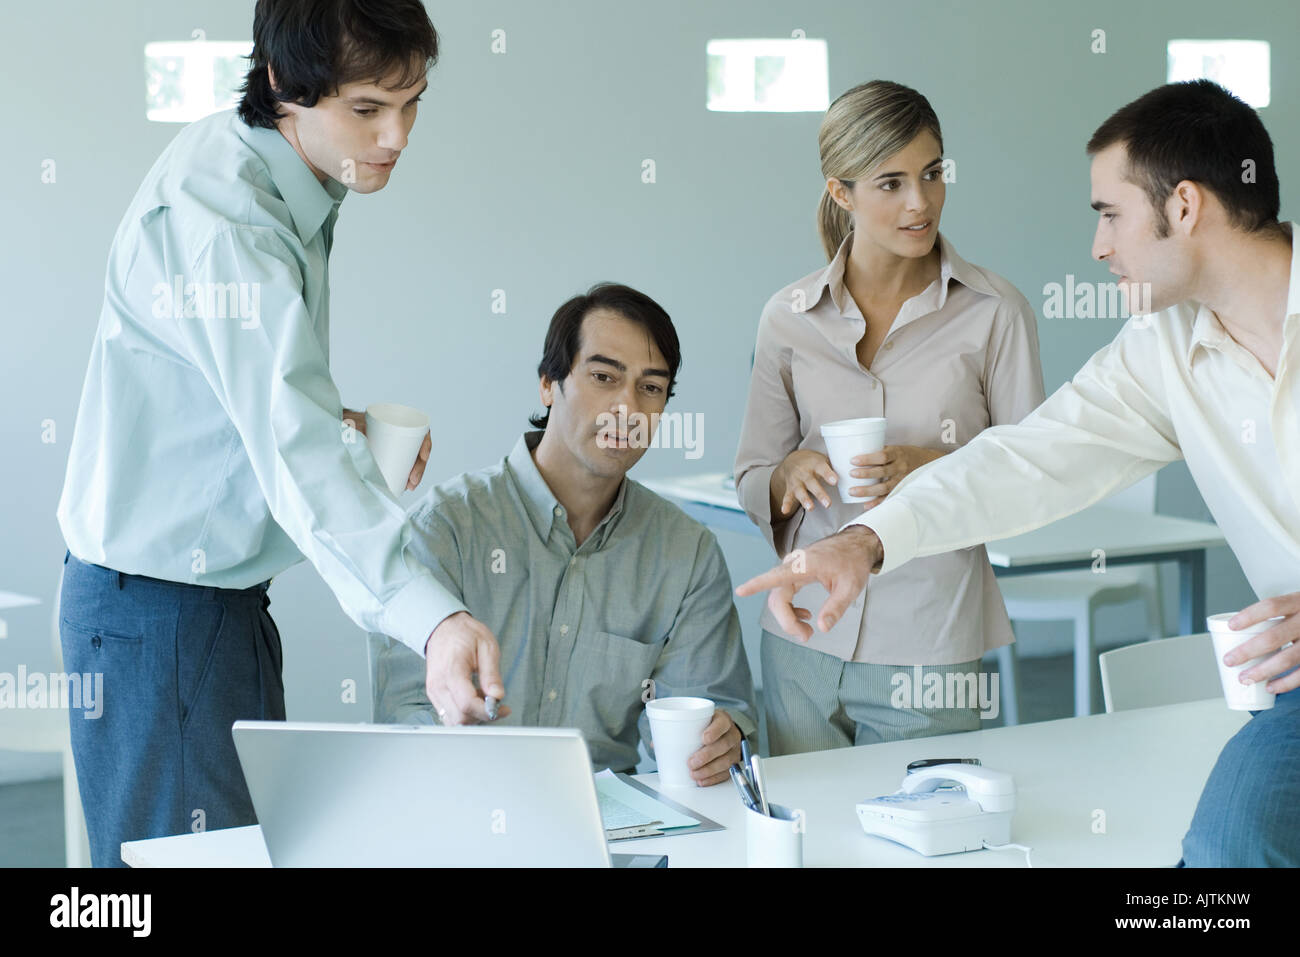 Business associates gathered around laptop, two pointing to screen Stock Photo